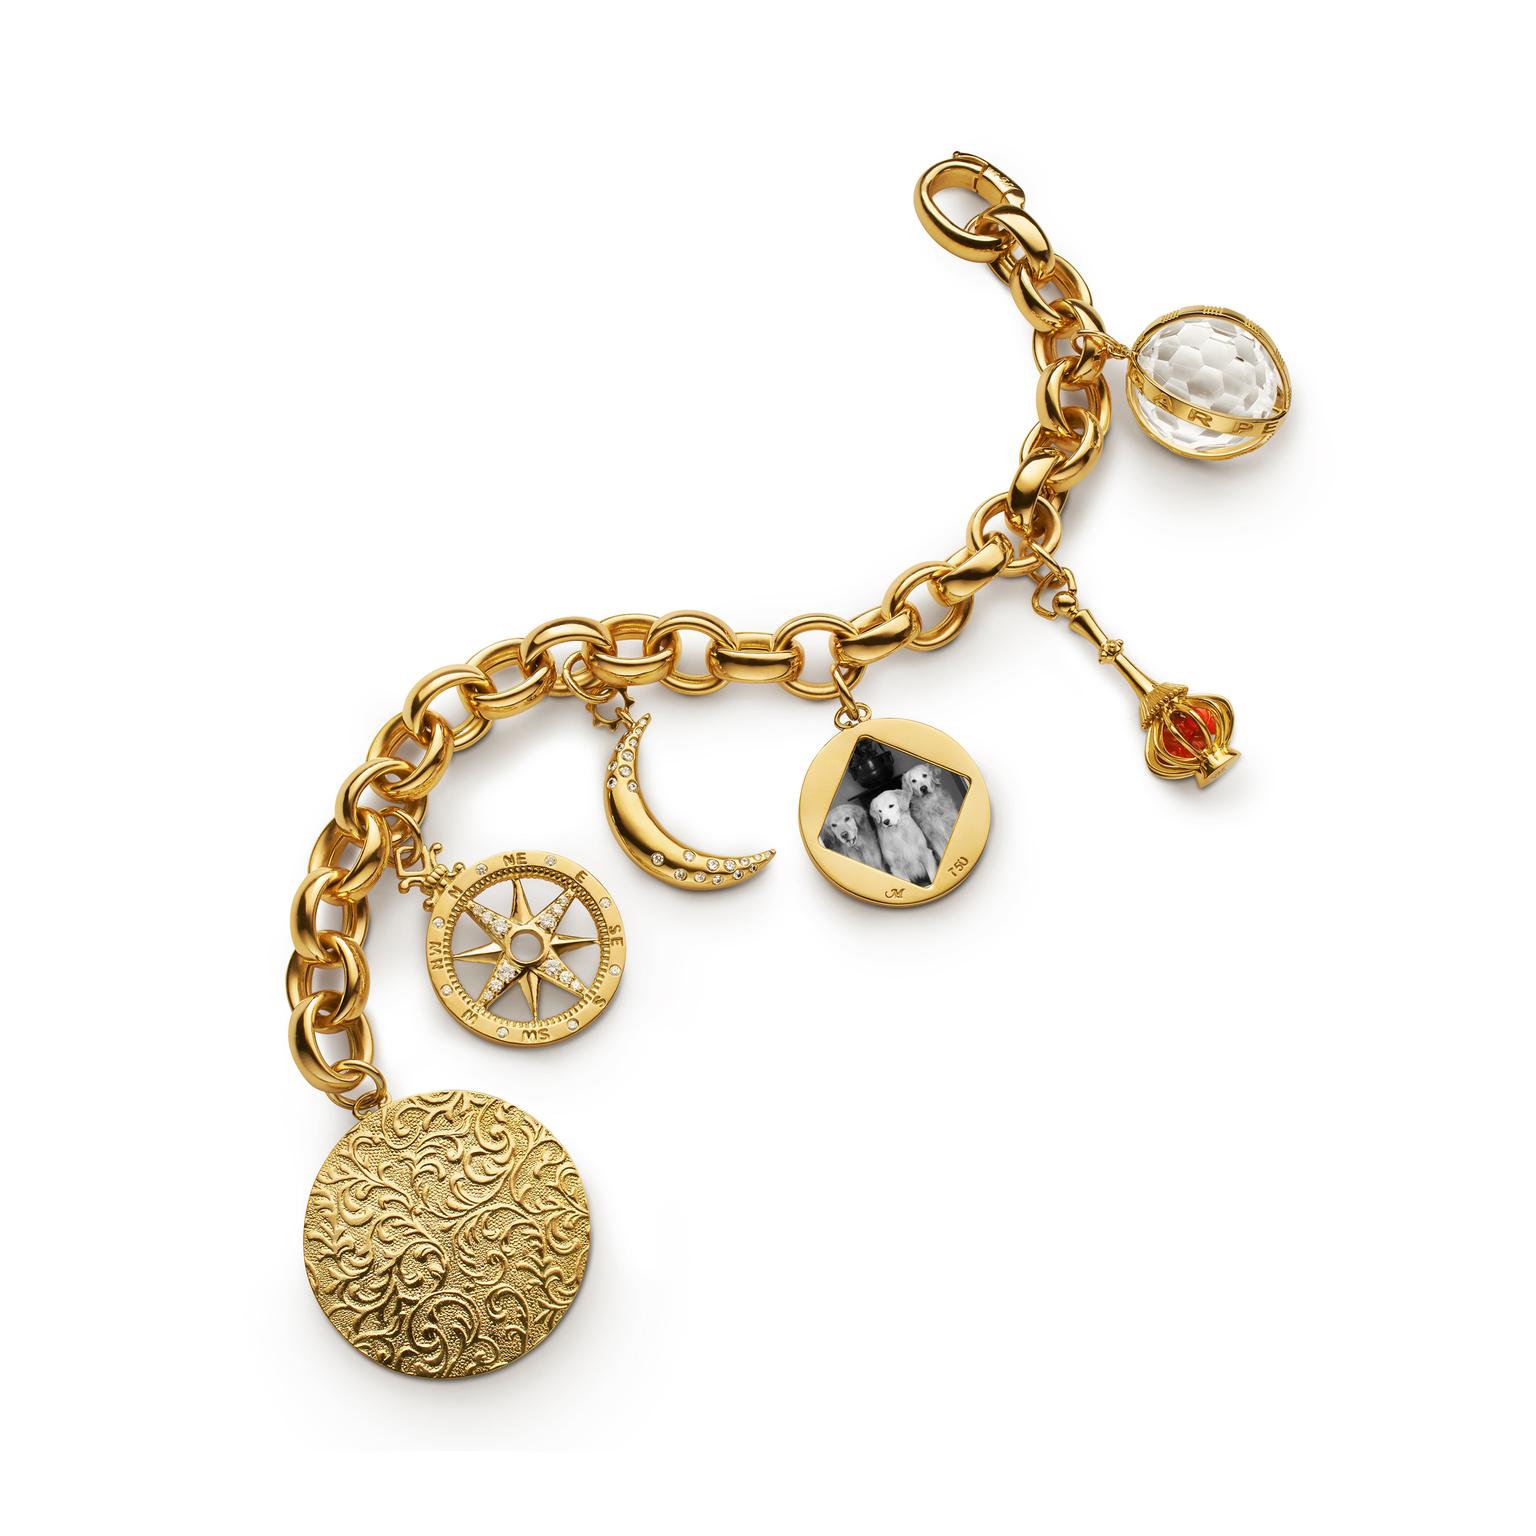 Details more than 77 monica rich kosann bracelet latest